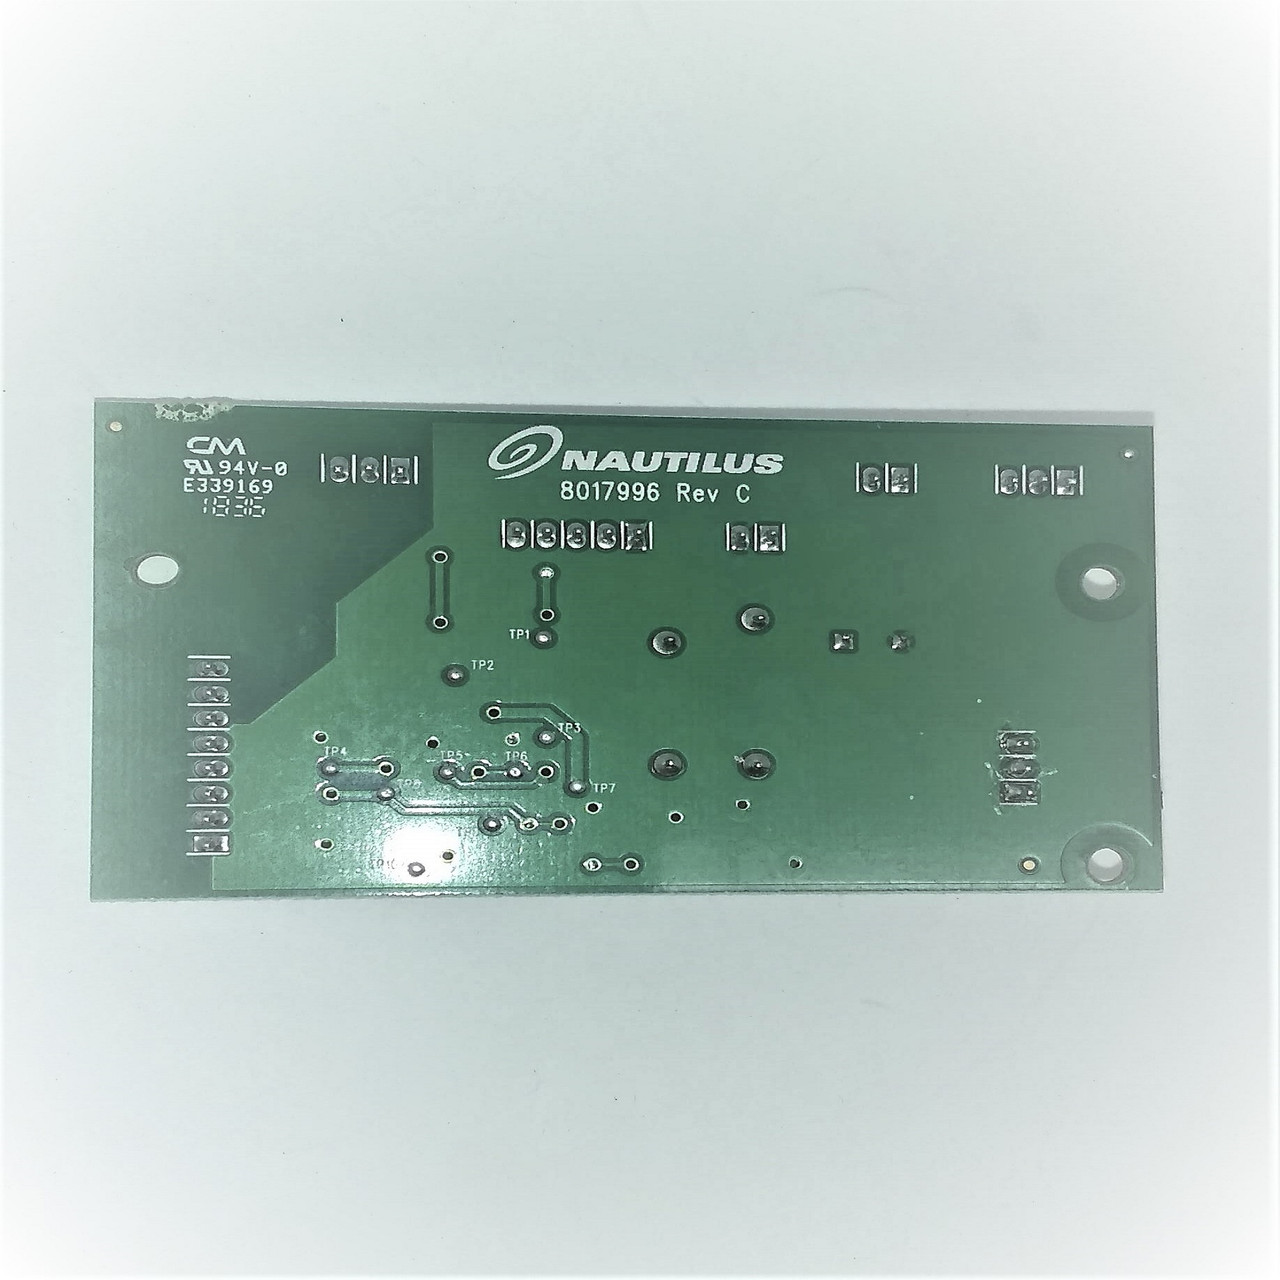 BowFlex Model LX5 LATERAL TRAINER 2 PCBA Slim Control Board Part Number 8017997